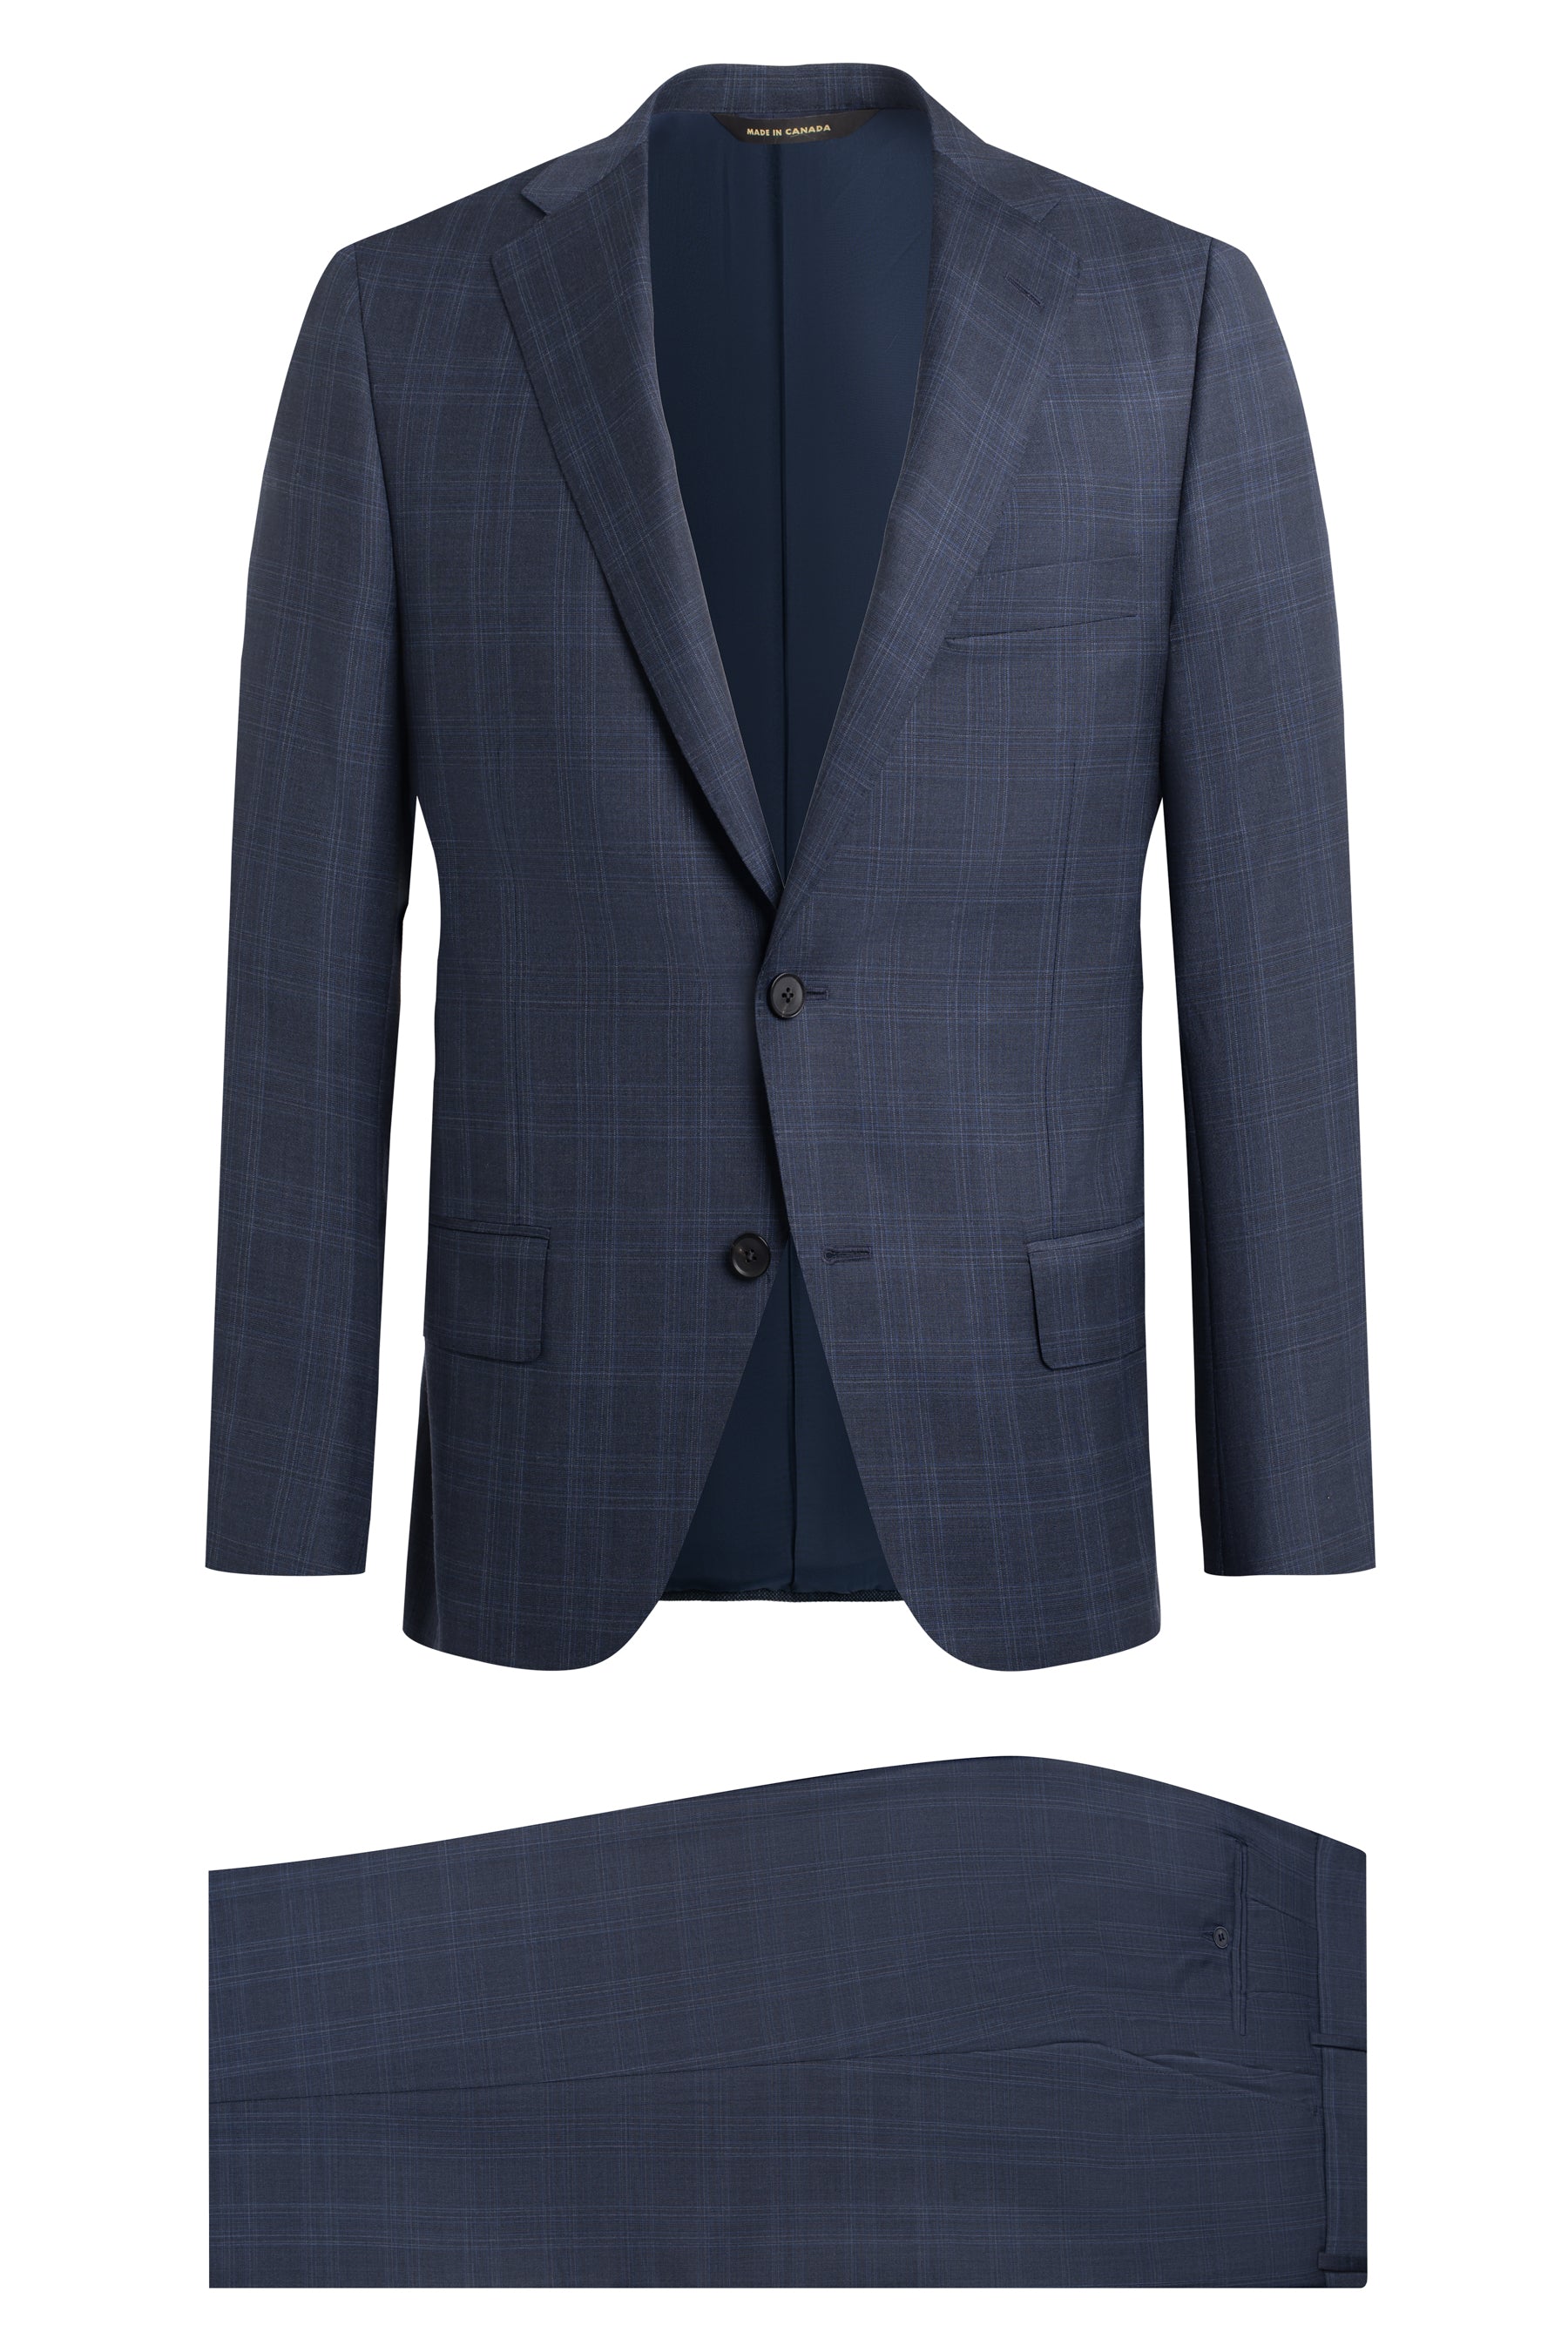 Men's Suit 3 Piece Set Business Professional Formal Suit Jacket Vest  Trousers Classic Solid Color Slim Fit Groom Wedding Dress Top Coat for  Various Occasions,3XL, Lake Blue: Buy Online at Best Price